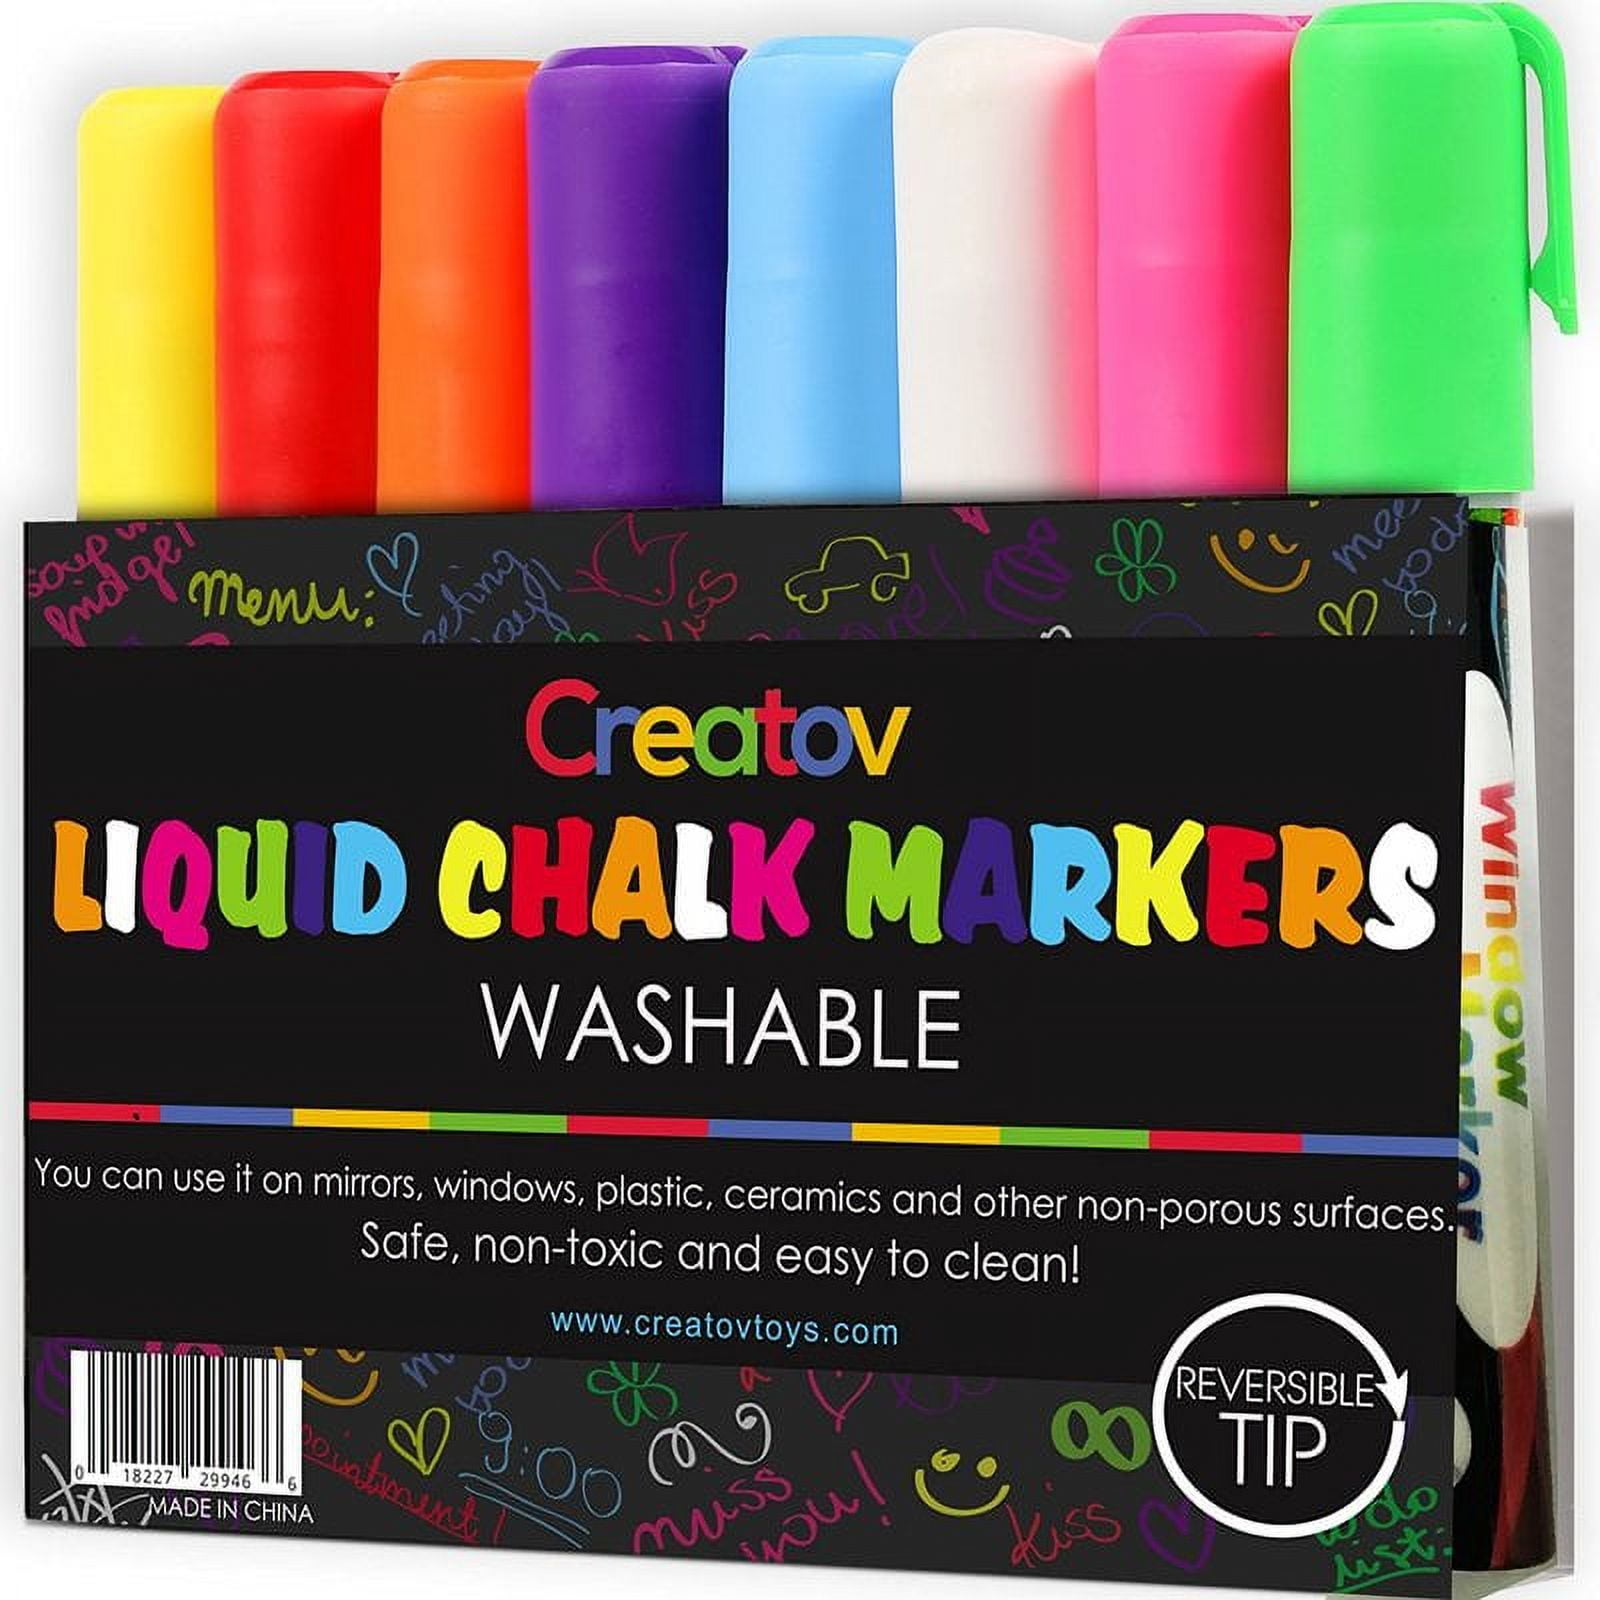 ONUPGO White Liquid Chalk Markers Pens 2 Pack, Chalk Markers for Chalkboard  Signs, Windows, Blackboard, Glass - Kid Safe, Non-Toxic, Water-Based,  Dustless & Erasable